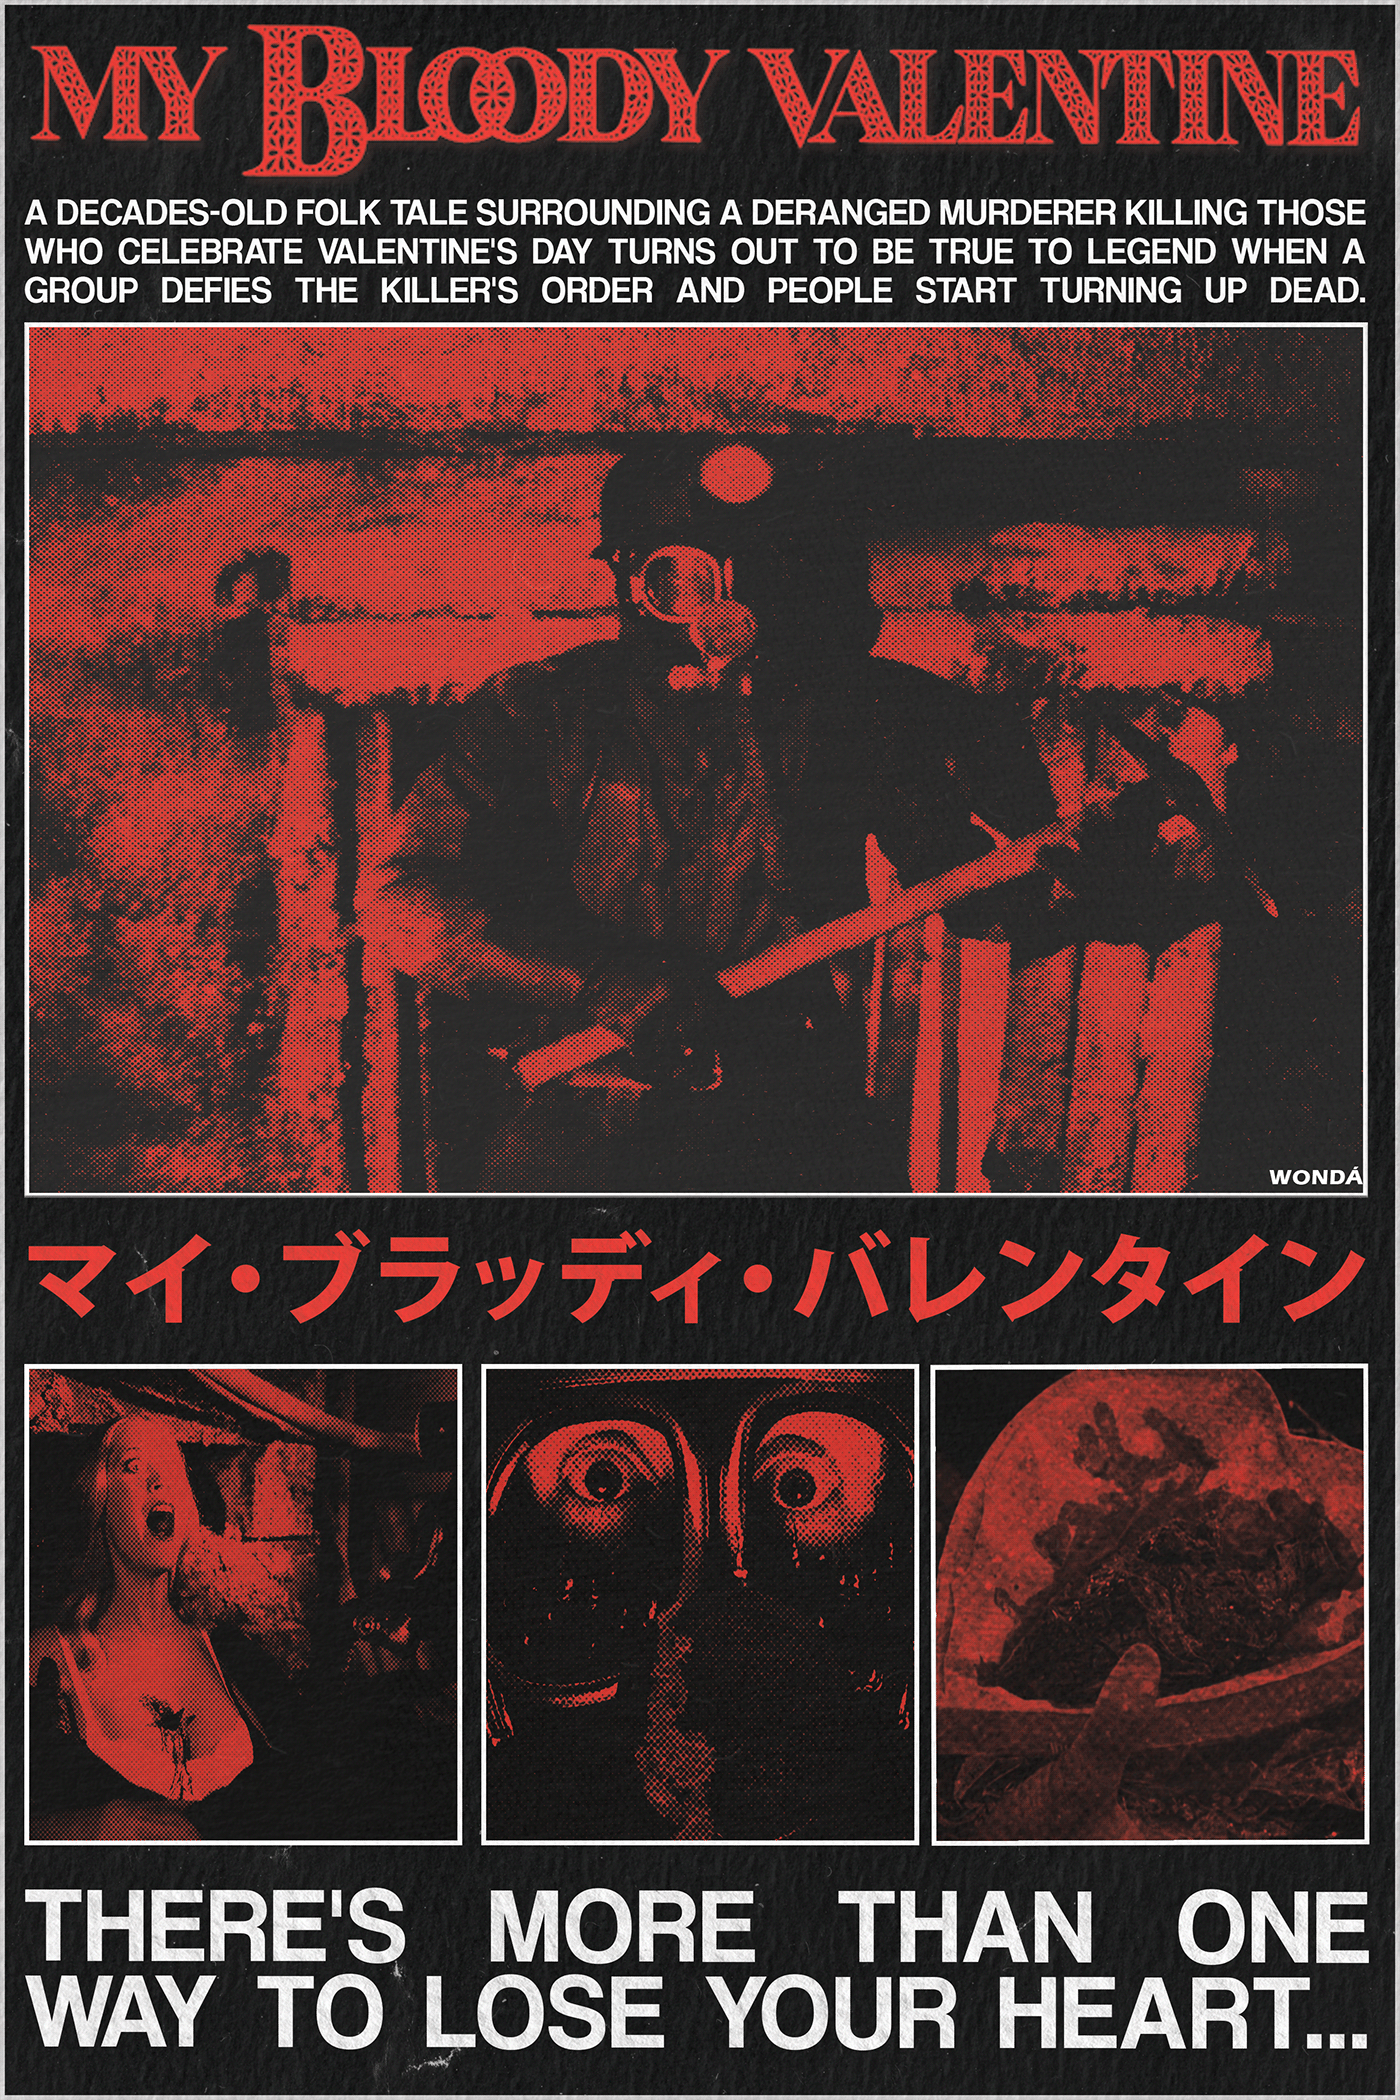 film poster george mihalka horror Horror Art horrormovie movie poster My Bloody Valentine poster Poster Design slasher